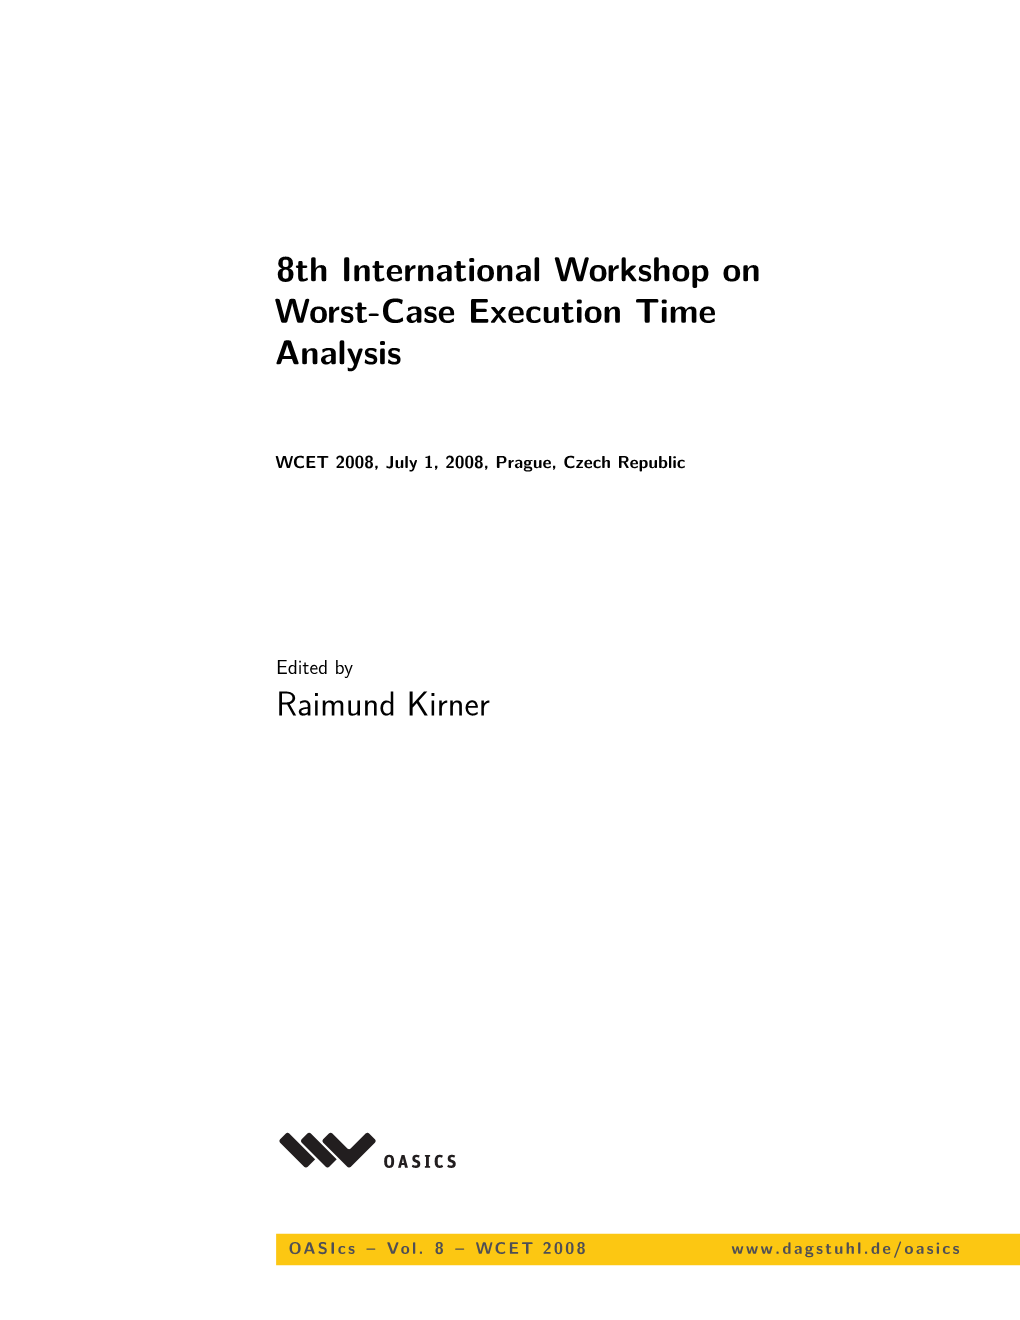 8Th International Workshop on Worst-Case Execution Time Analysis